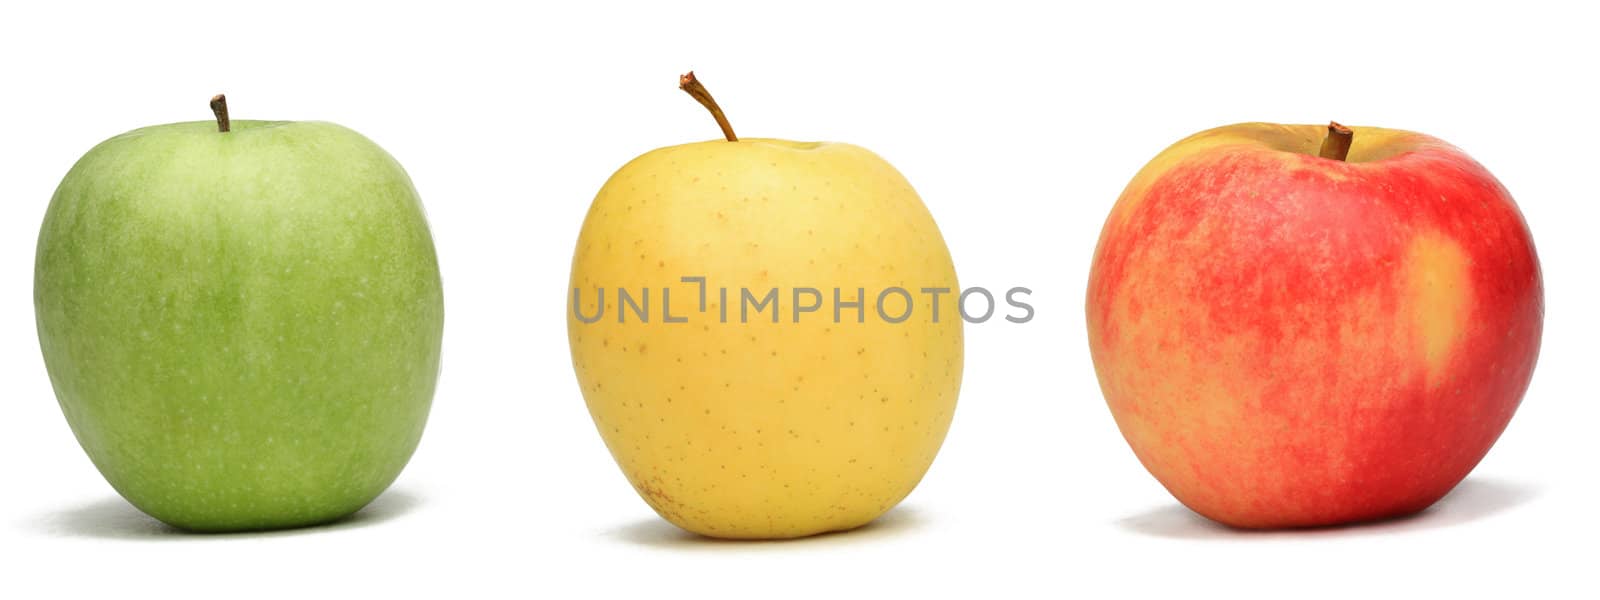 Three apples by RazvanPhotography